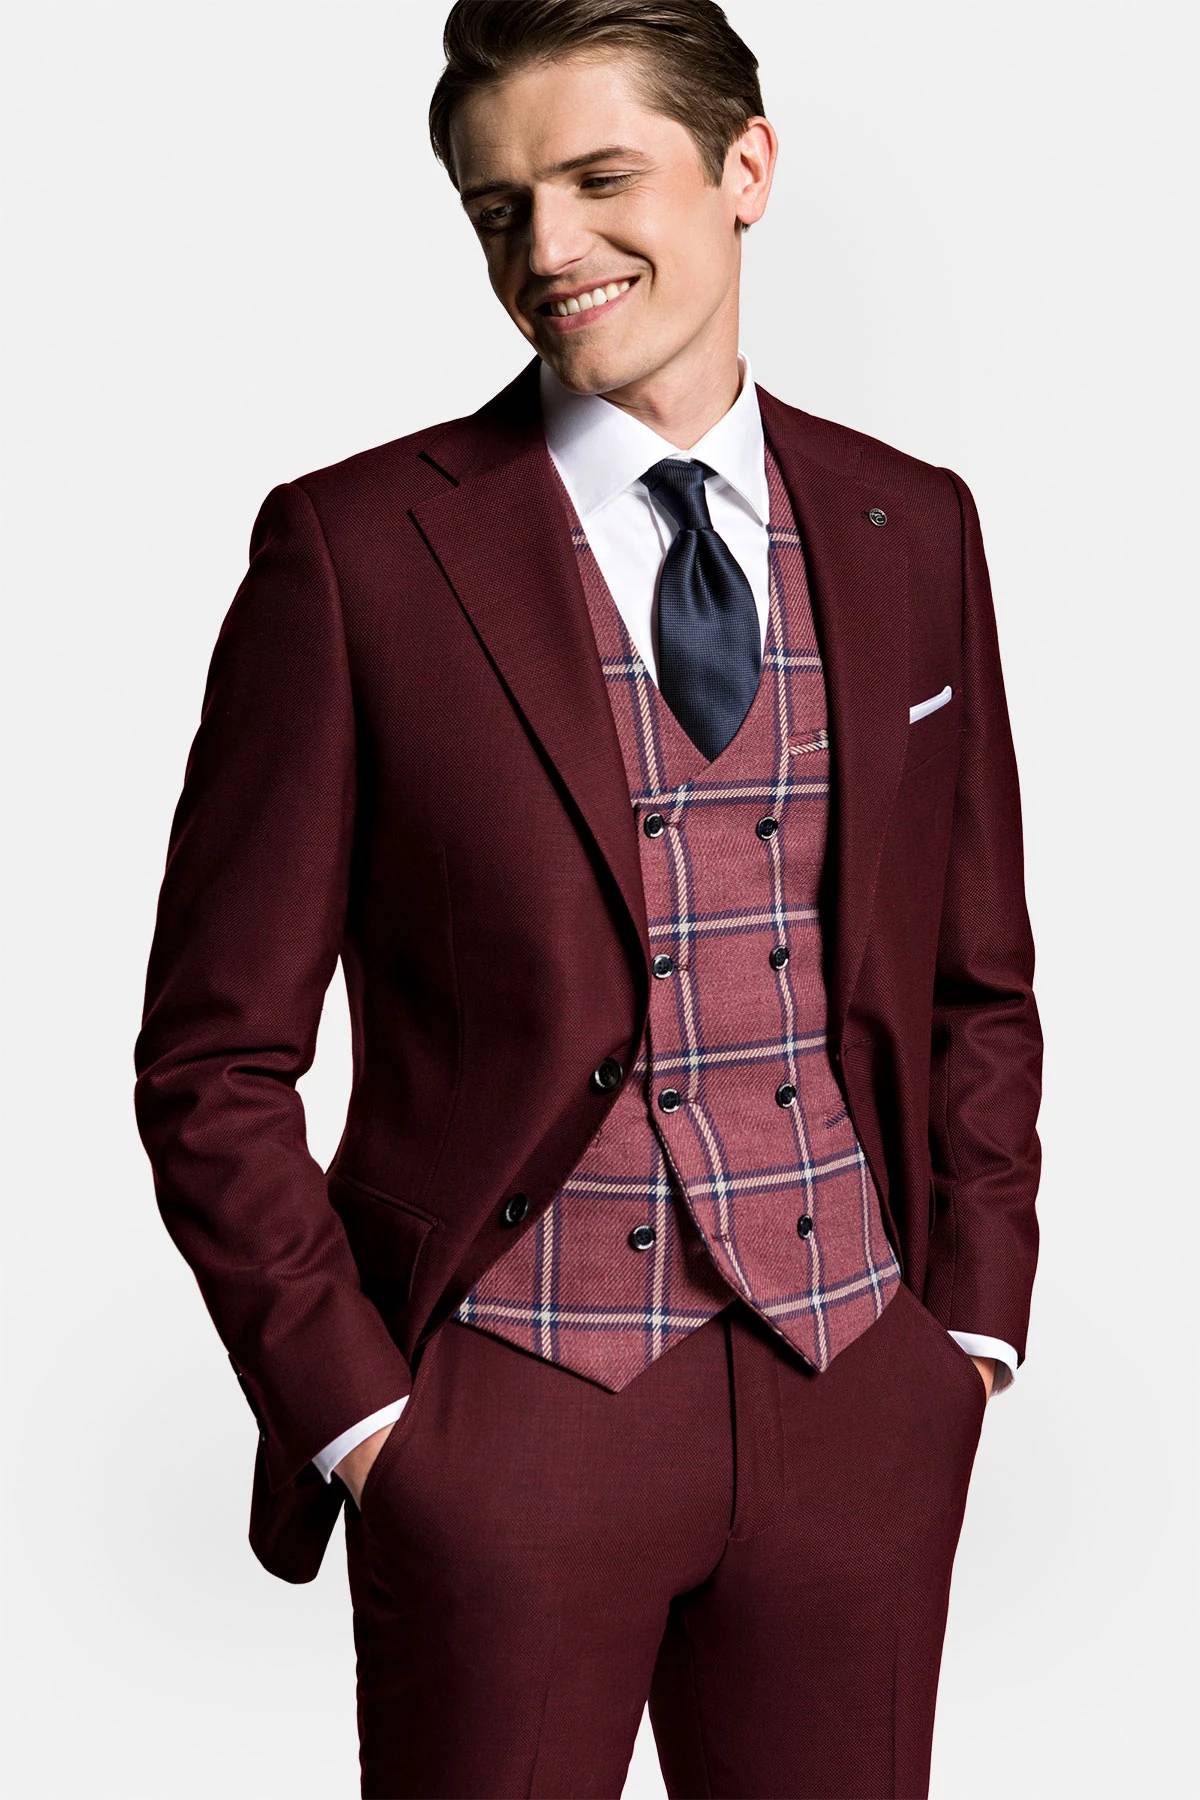 Chris Hemsworth_stylizacja_borodowy garnitur